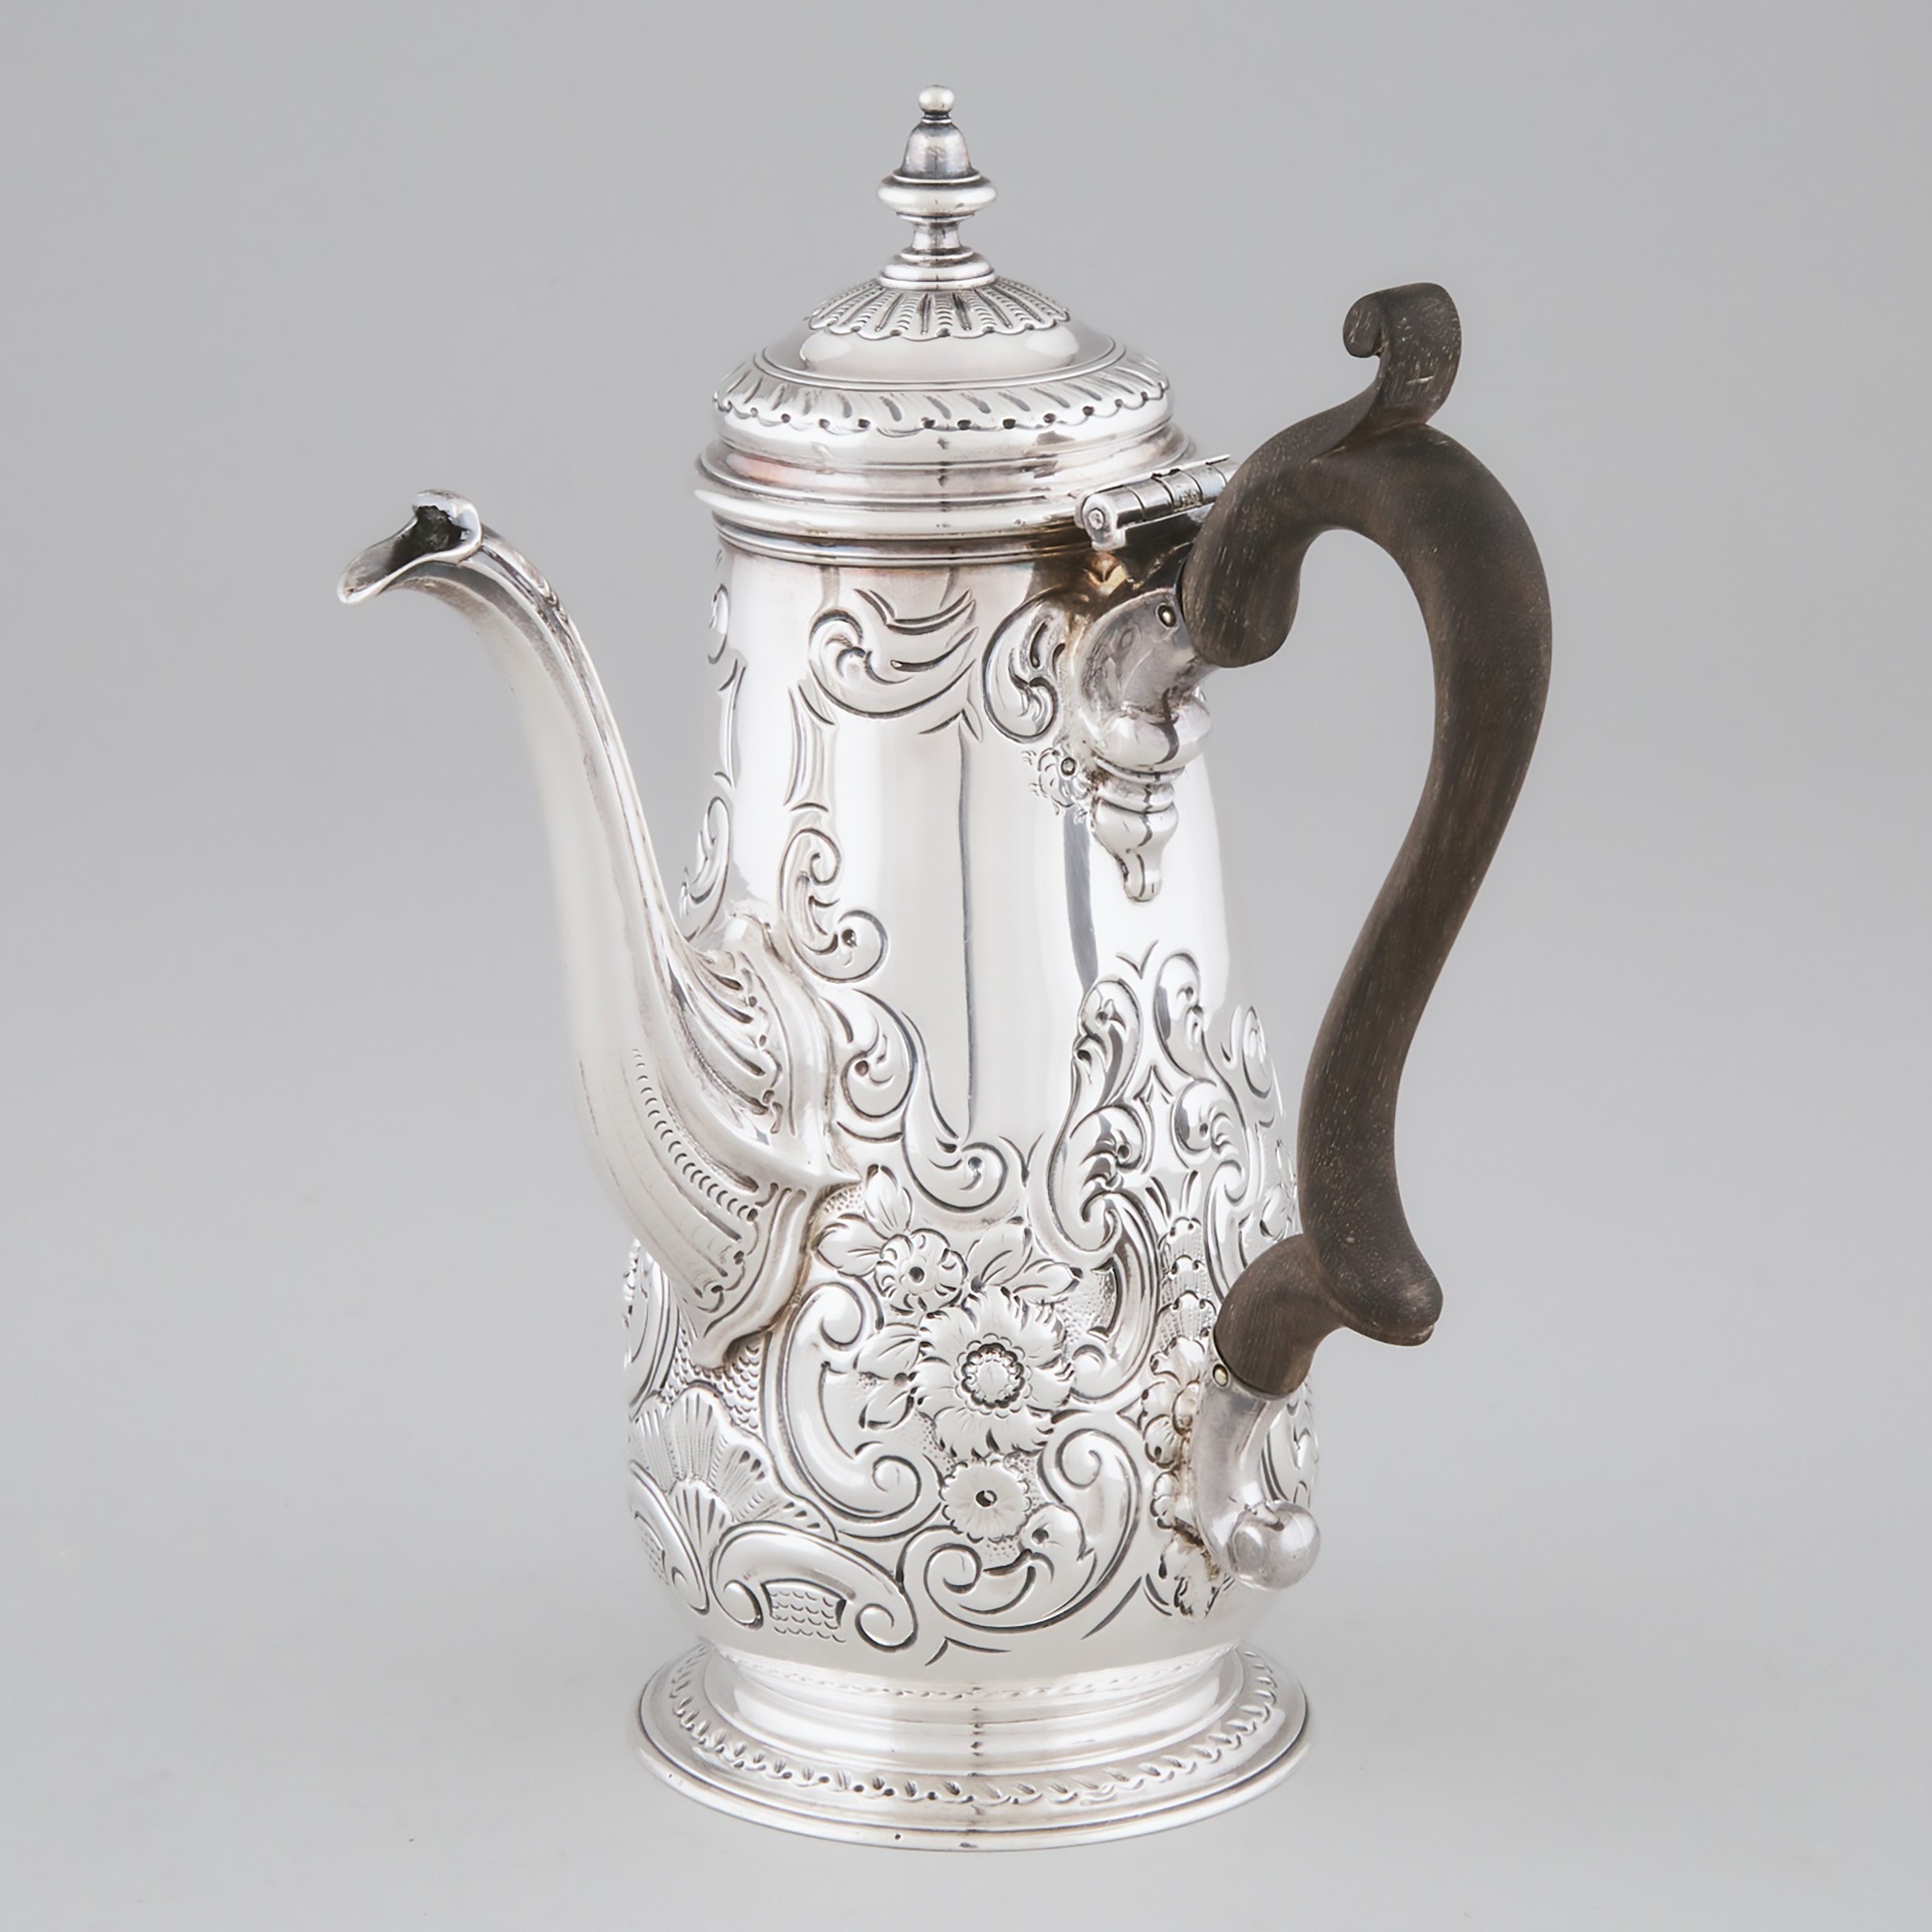 George II Silver Coffee Pot, Henry Morris, London, 1744